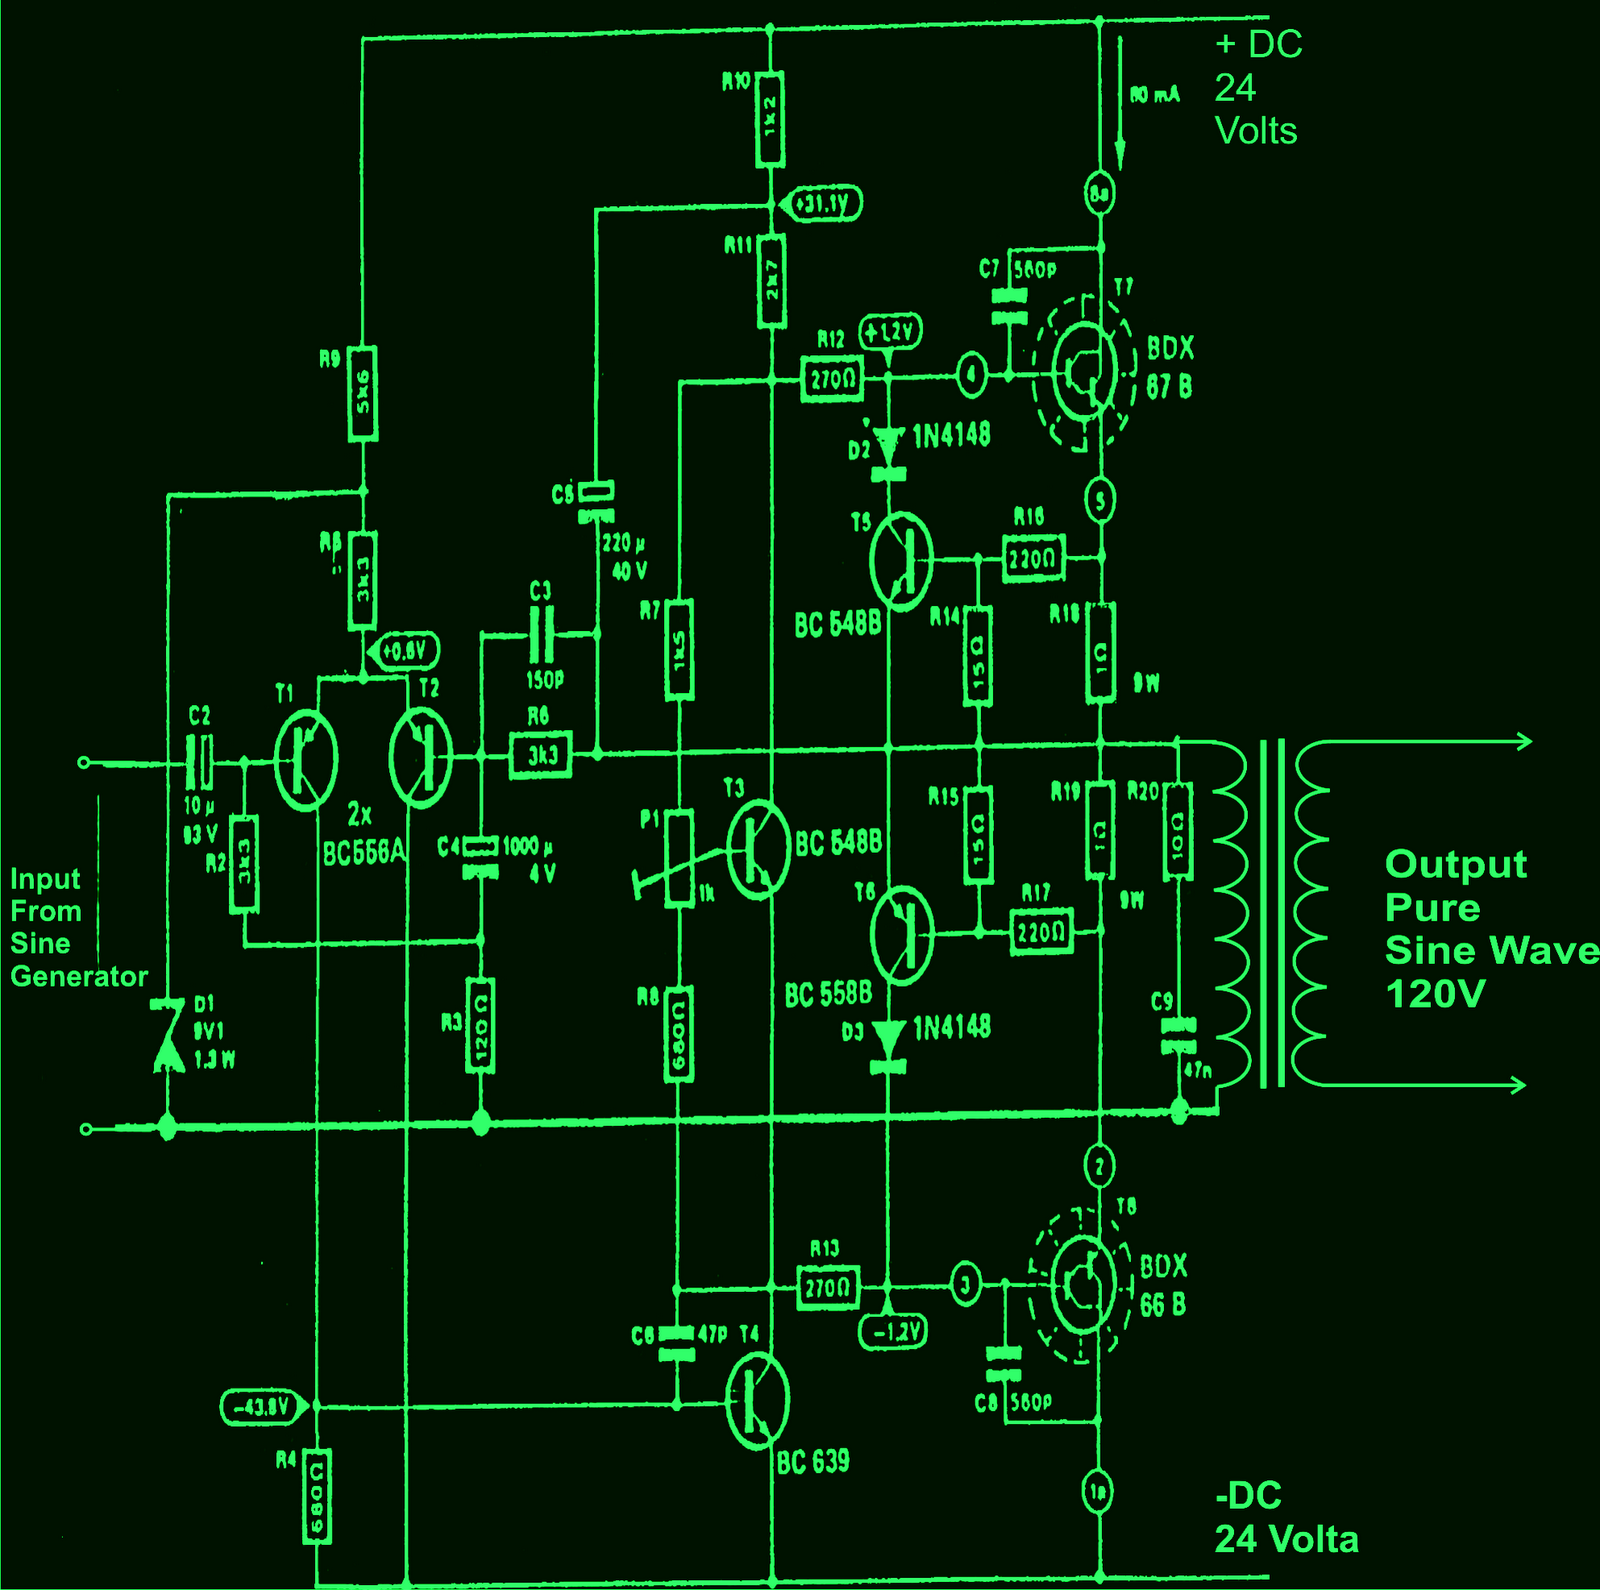 How to Build a100 Watt, Pure Sine Wave Inverter Circuit ...